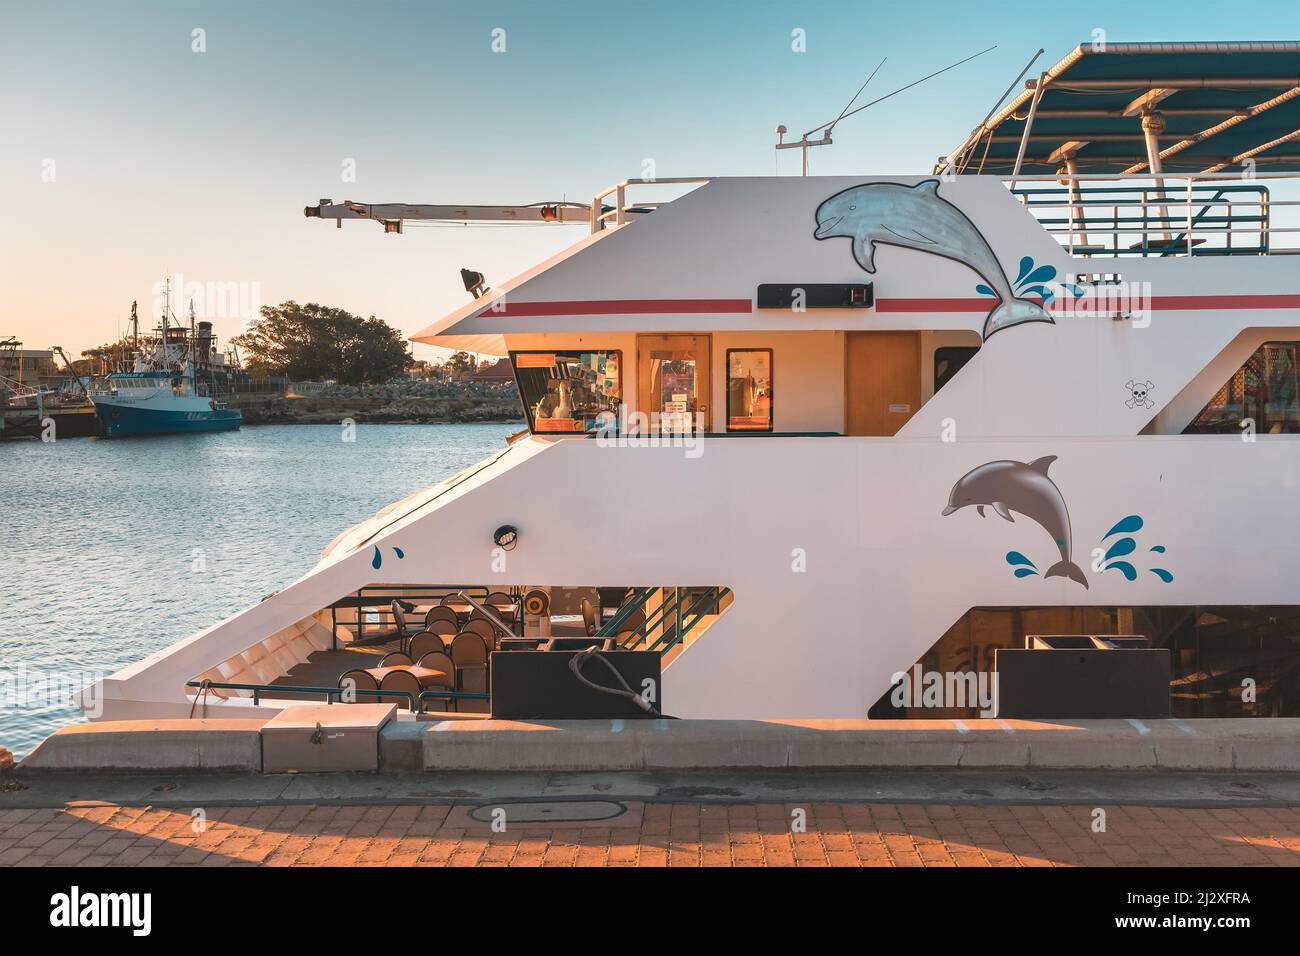 Port Adelaide, Australien - 9. September 2020: Die Fähre Dolphin Explorer legt nach der Bootstour auf dem Port River bei Sonnenuntergang an den Docks fest Stockfoto